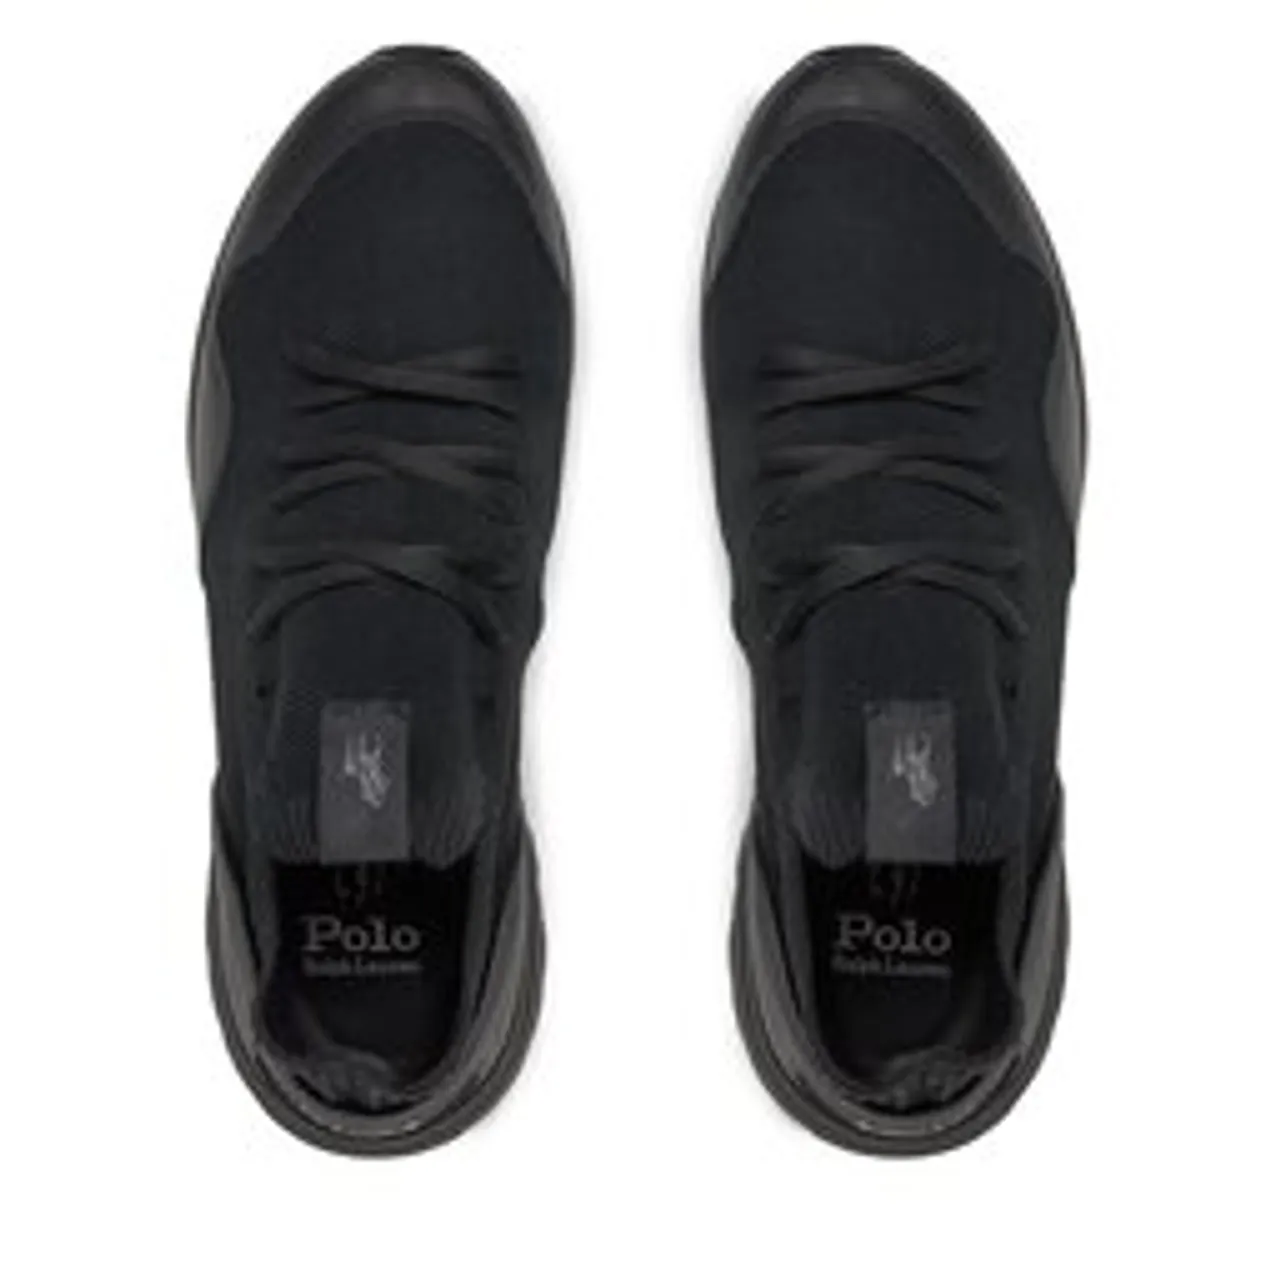 Sneakers Polo Ralph Lauren Trkstr 200ii 809891760001 Black